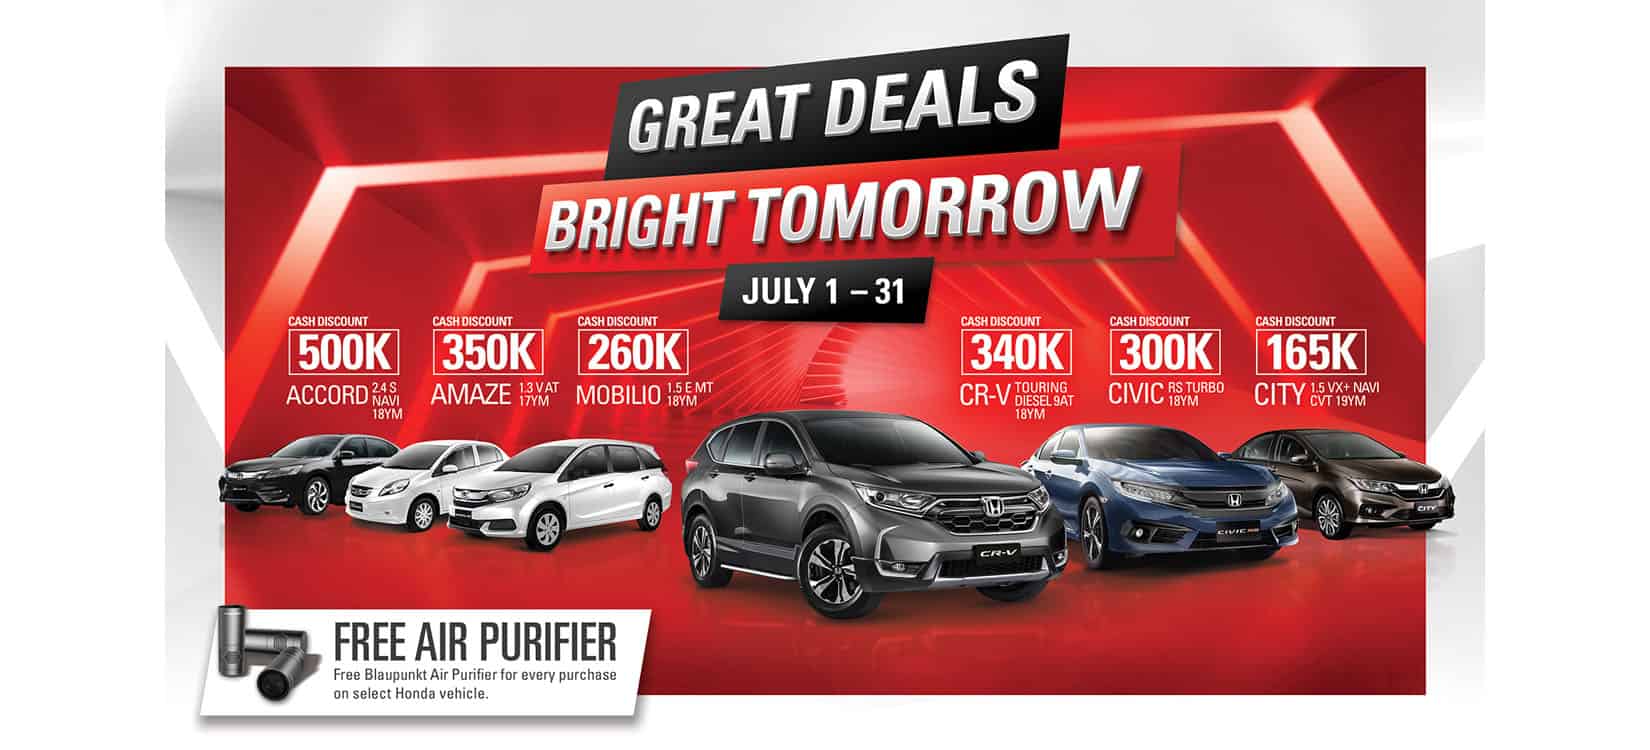 Huge cash discounts, great deals await at Honda this July